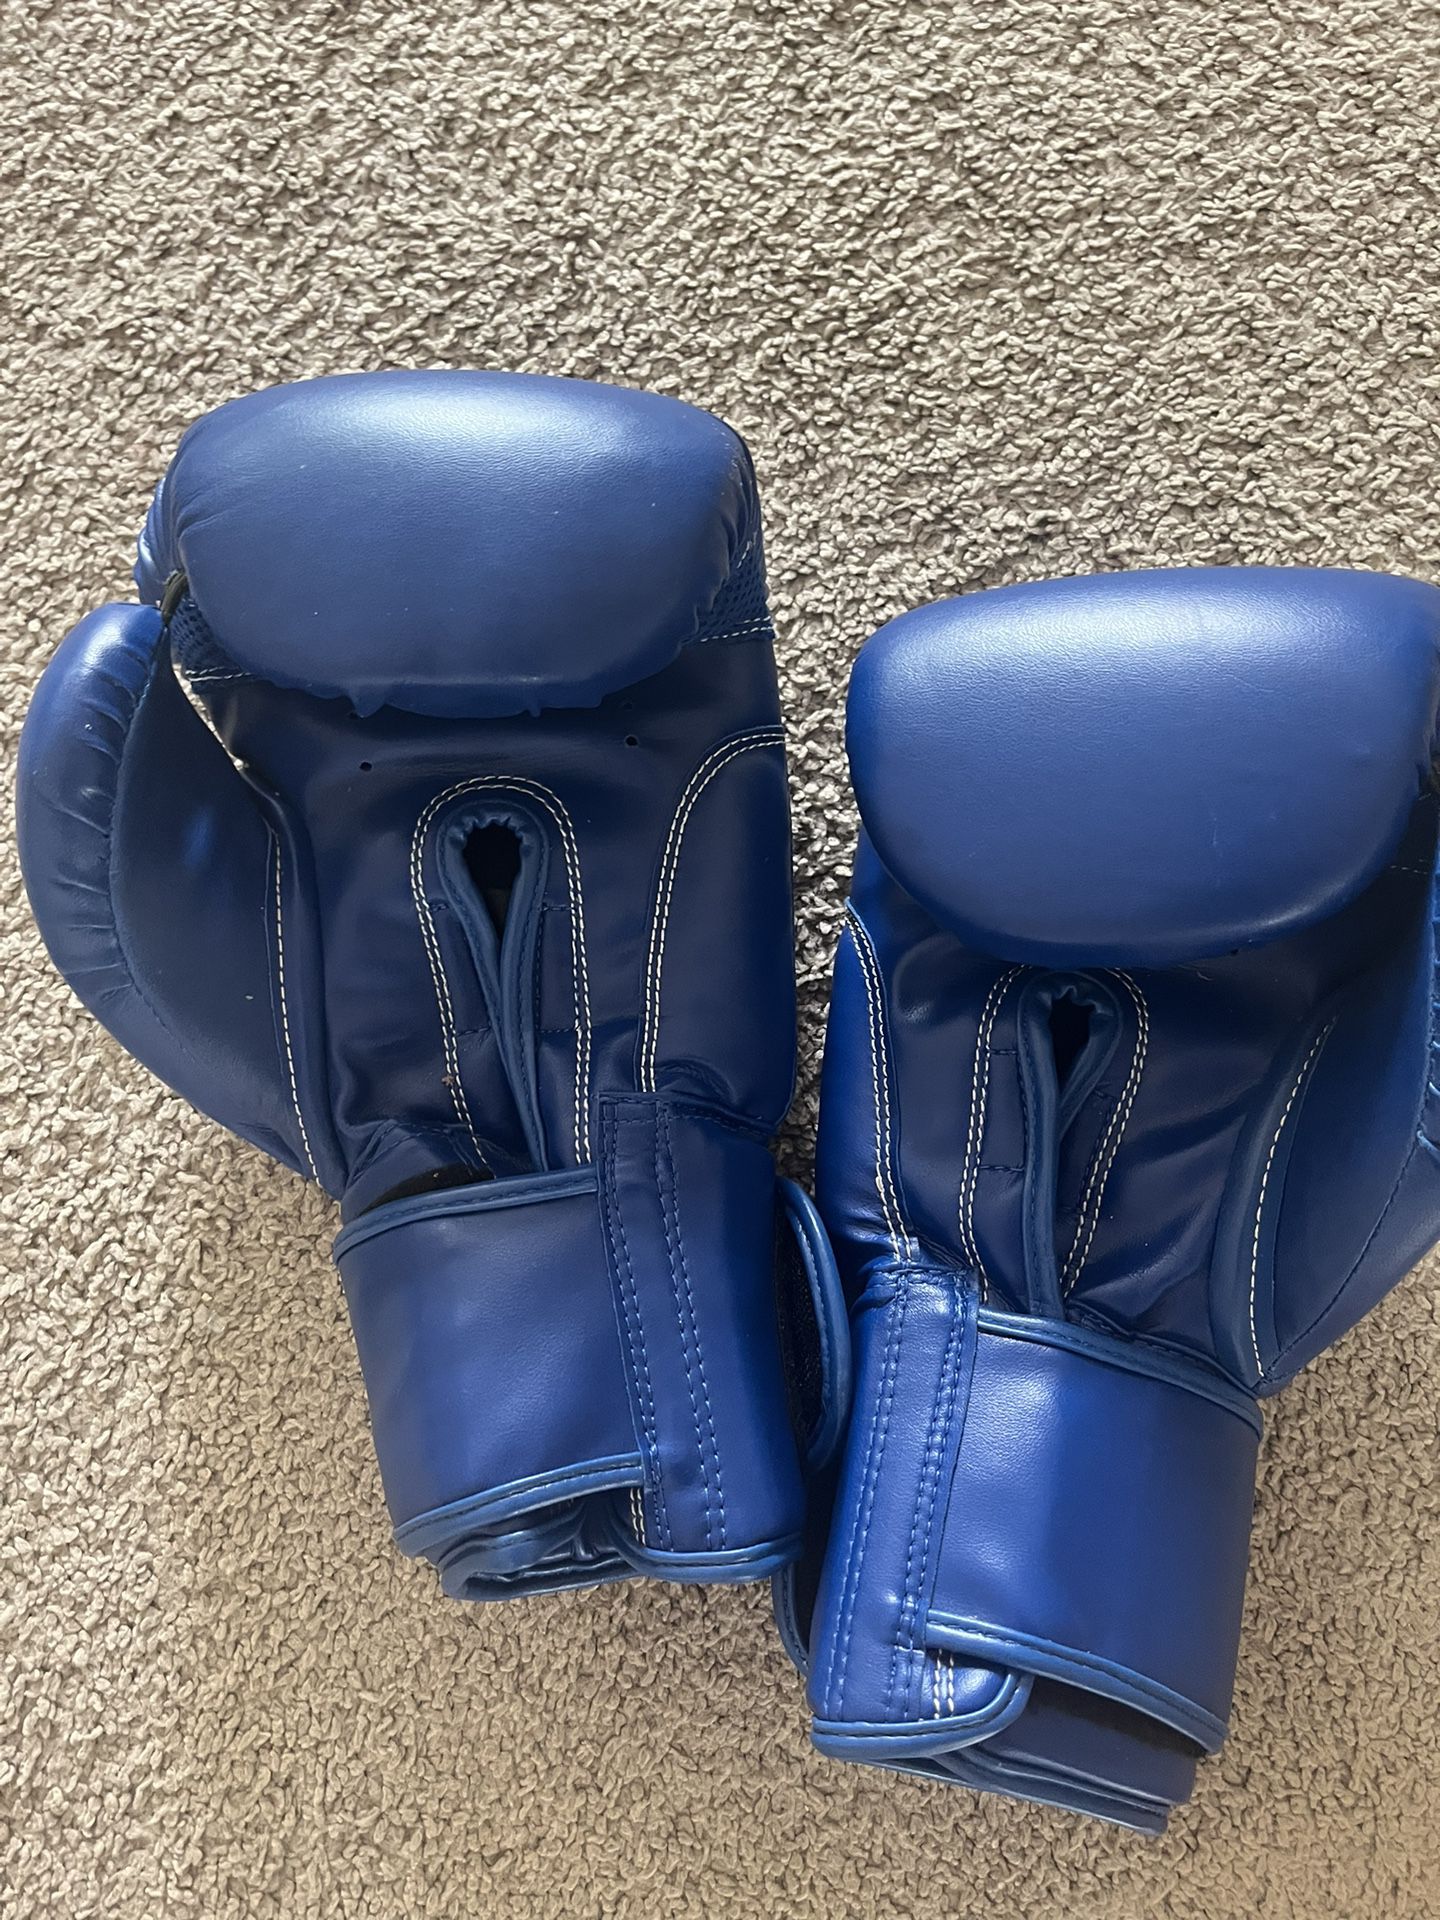 UFC Boxing Gloves 